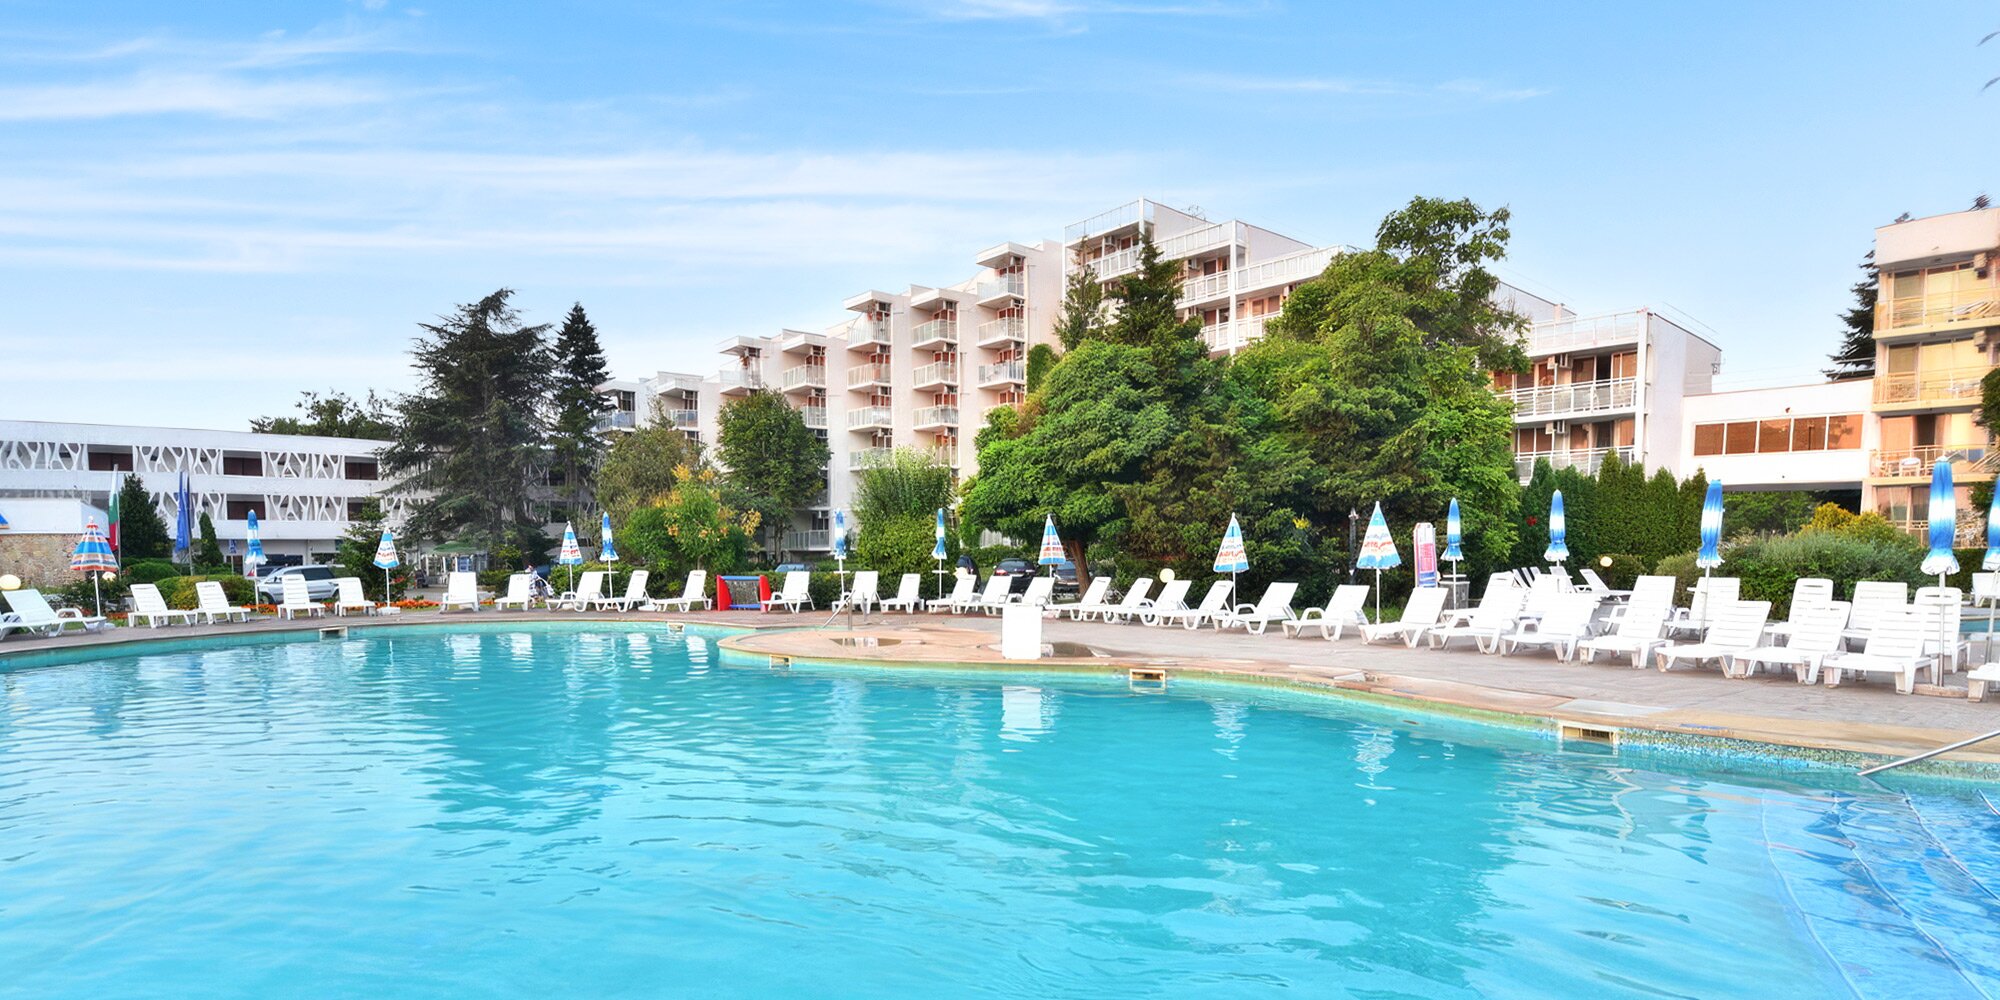 Letecky do Bulharska: 4* Hotel Malibu s all inclusive